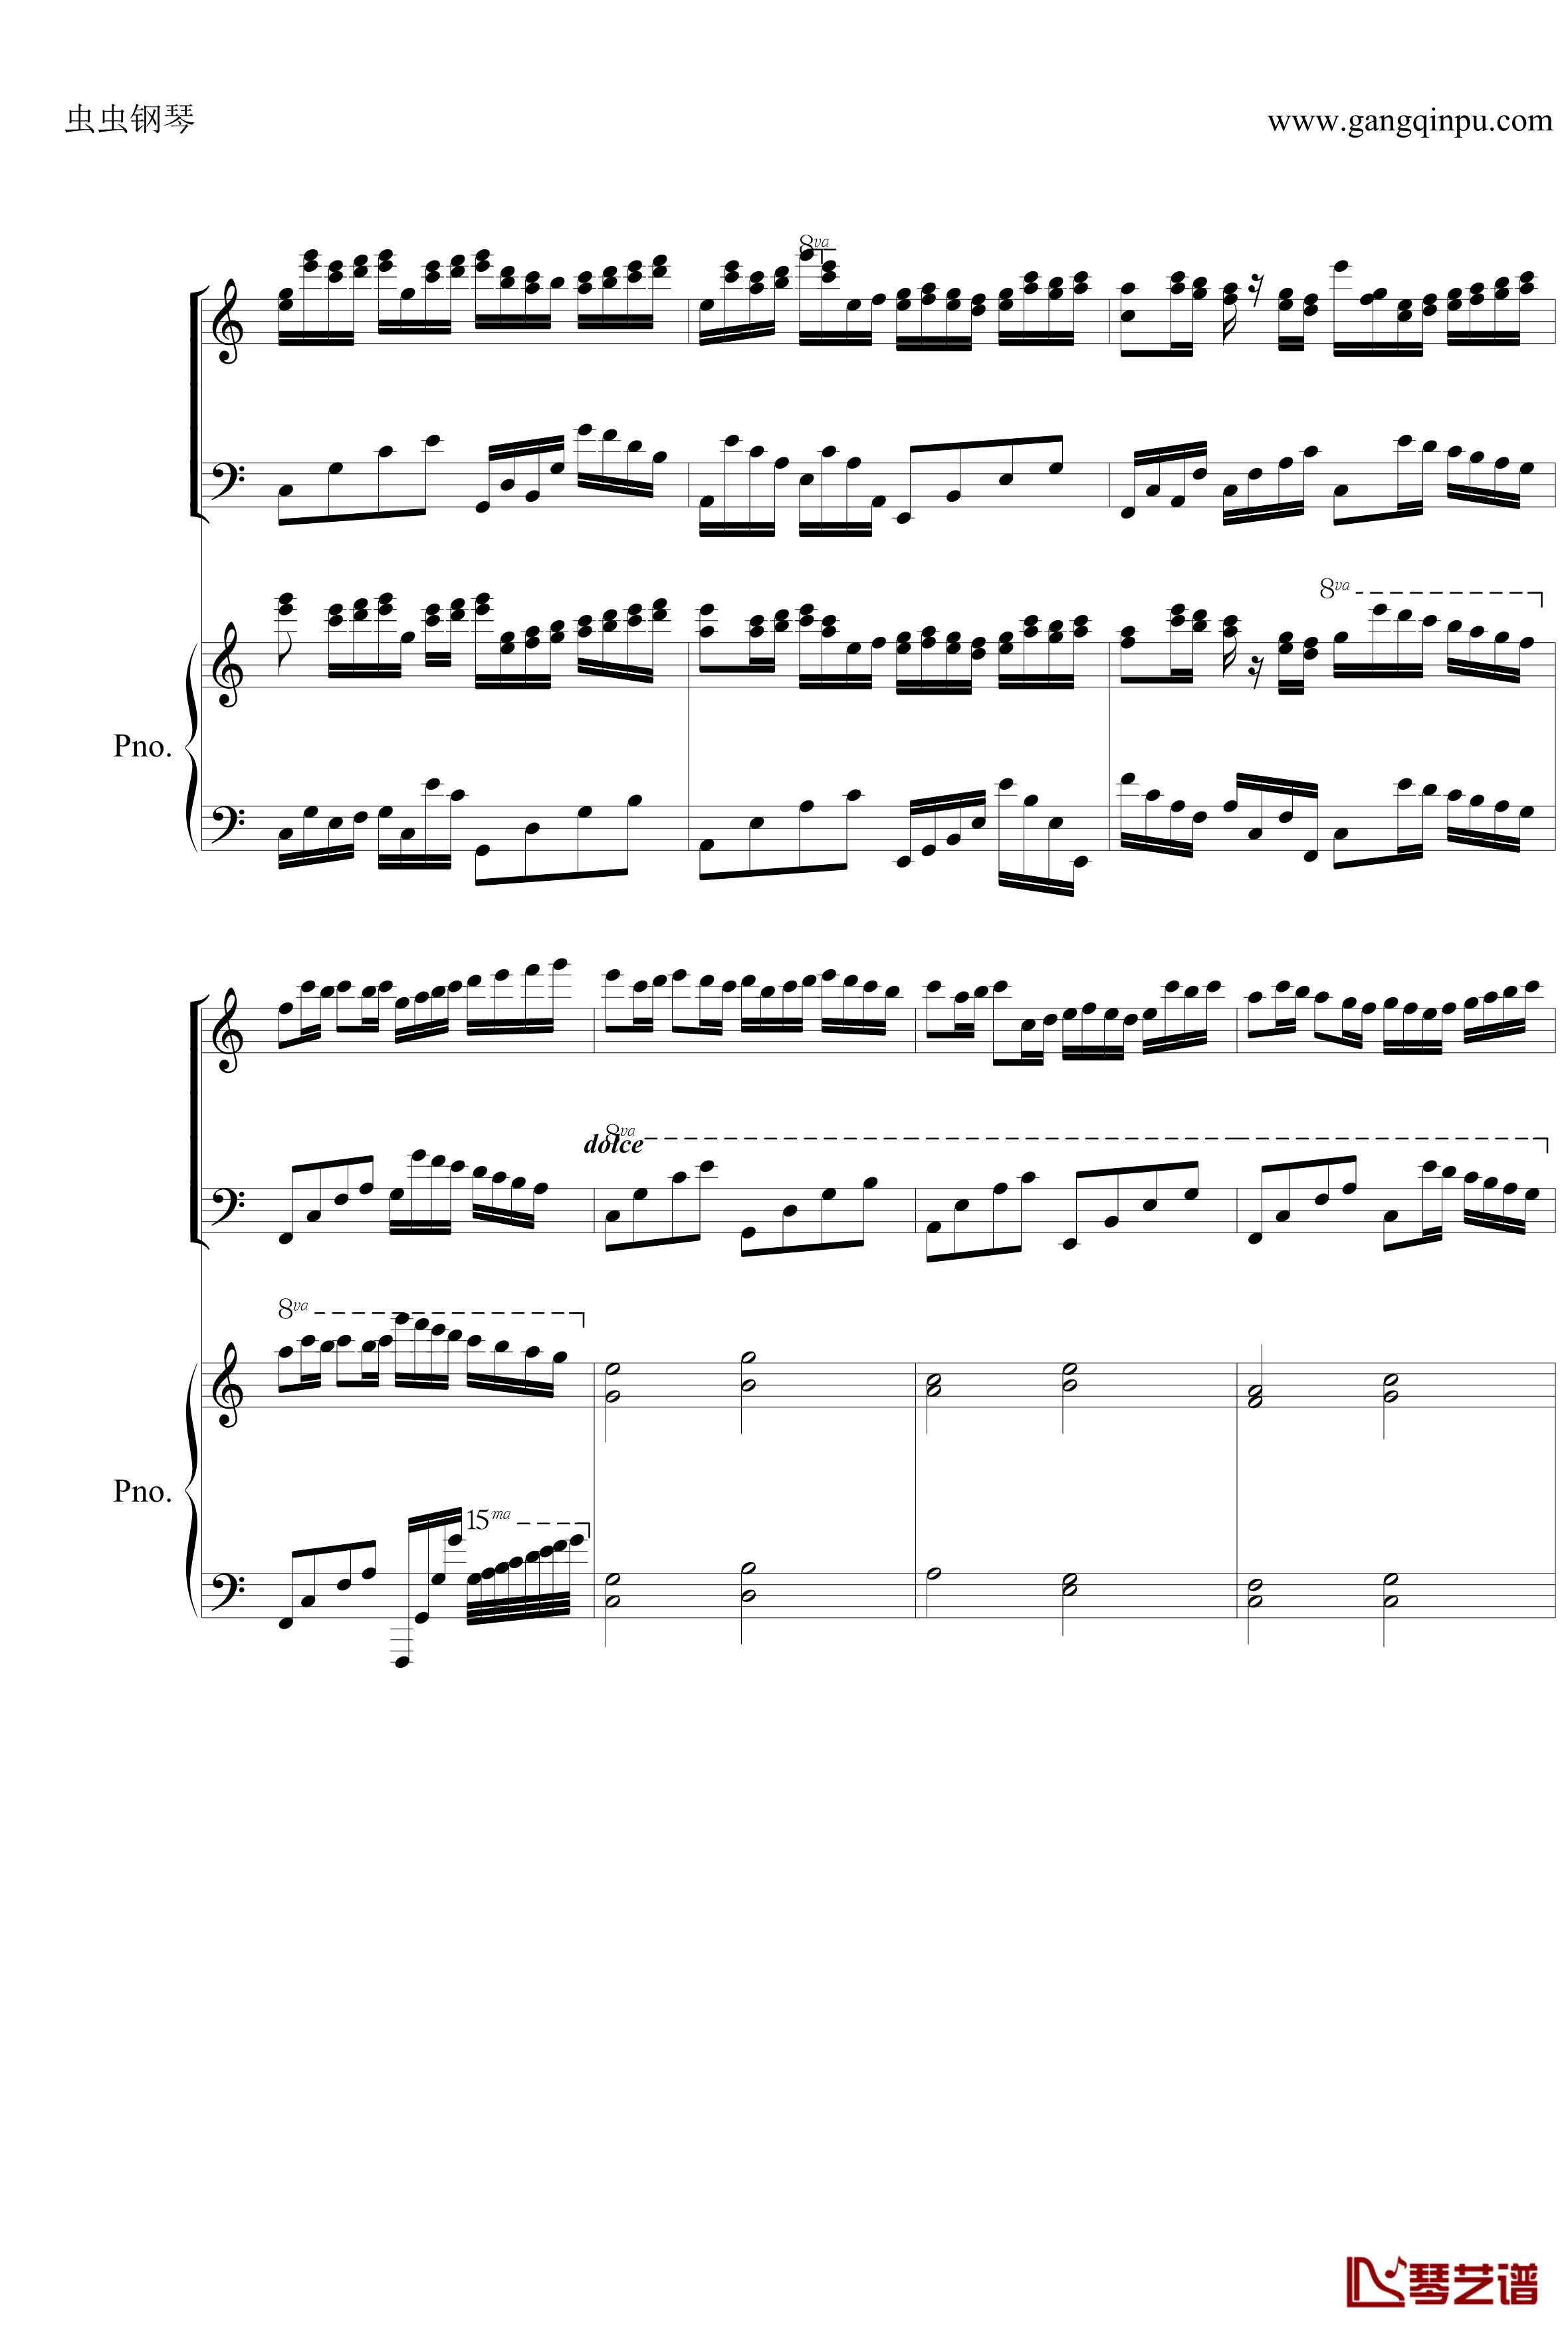 Canon双钢琴钢琴谱-仅供消遣-帕赫贝尔-Pachelbel5